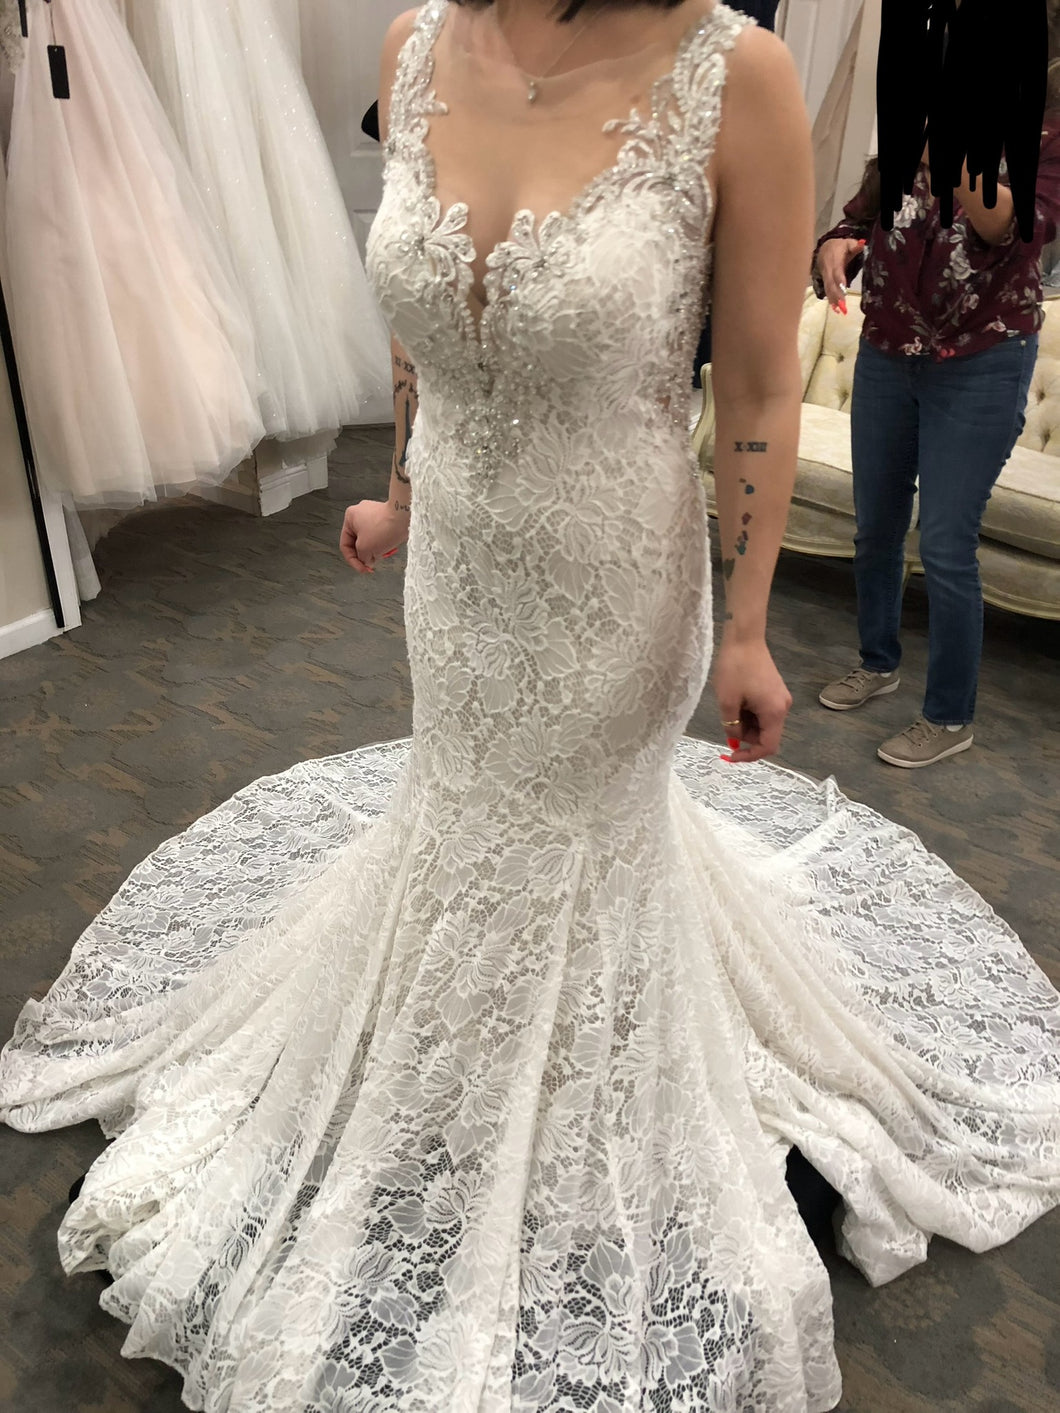 Allure Bridals '9460' wedding dress size-10 NEW